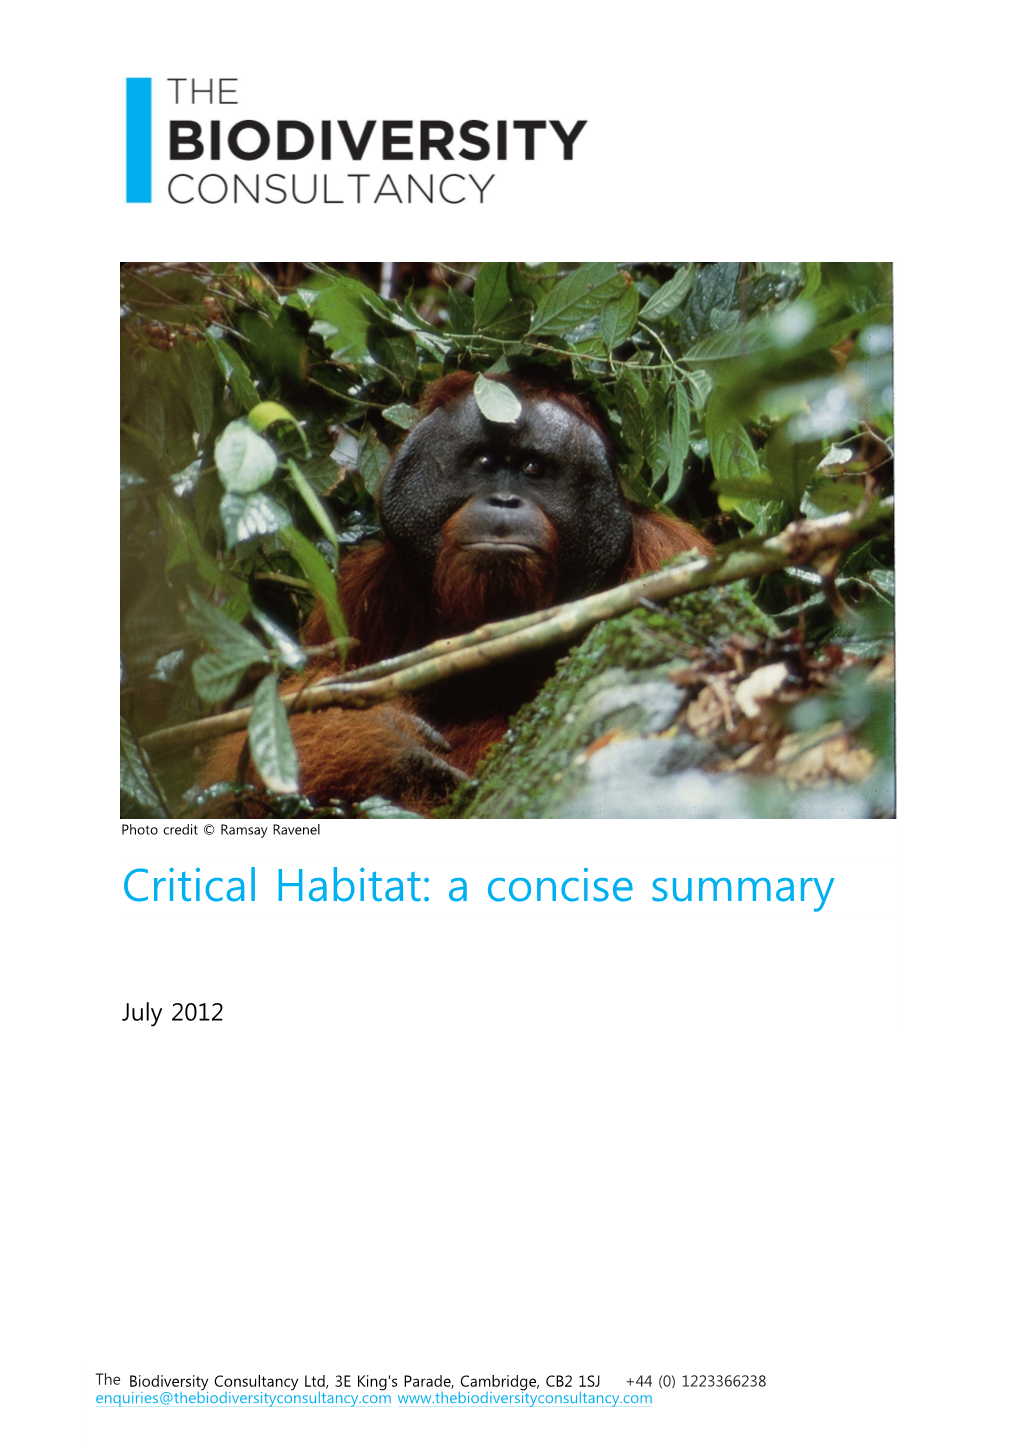 Critical Habitat: a Concise Summary